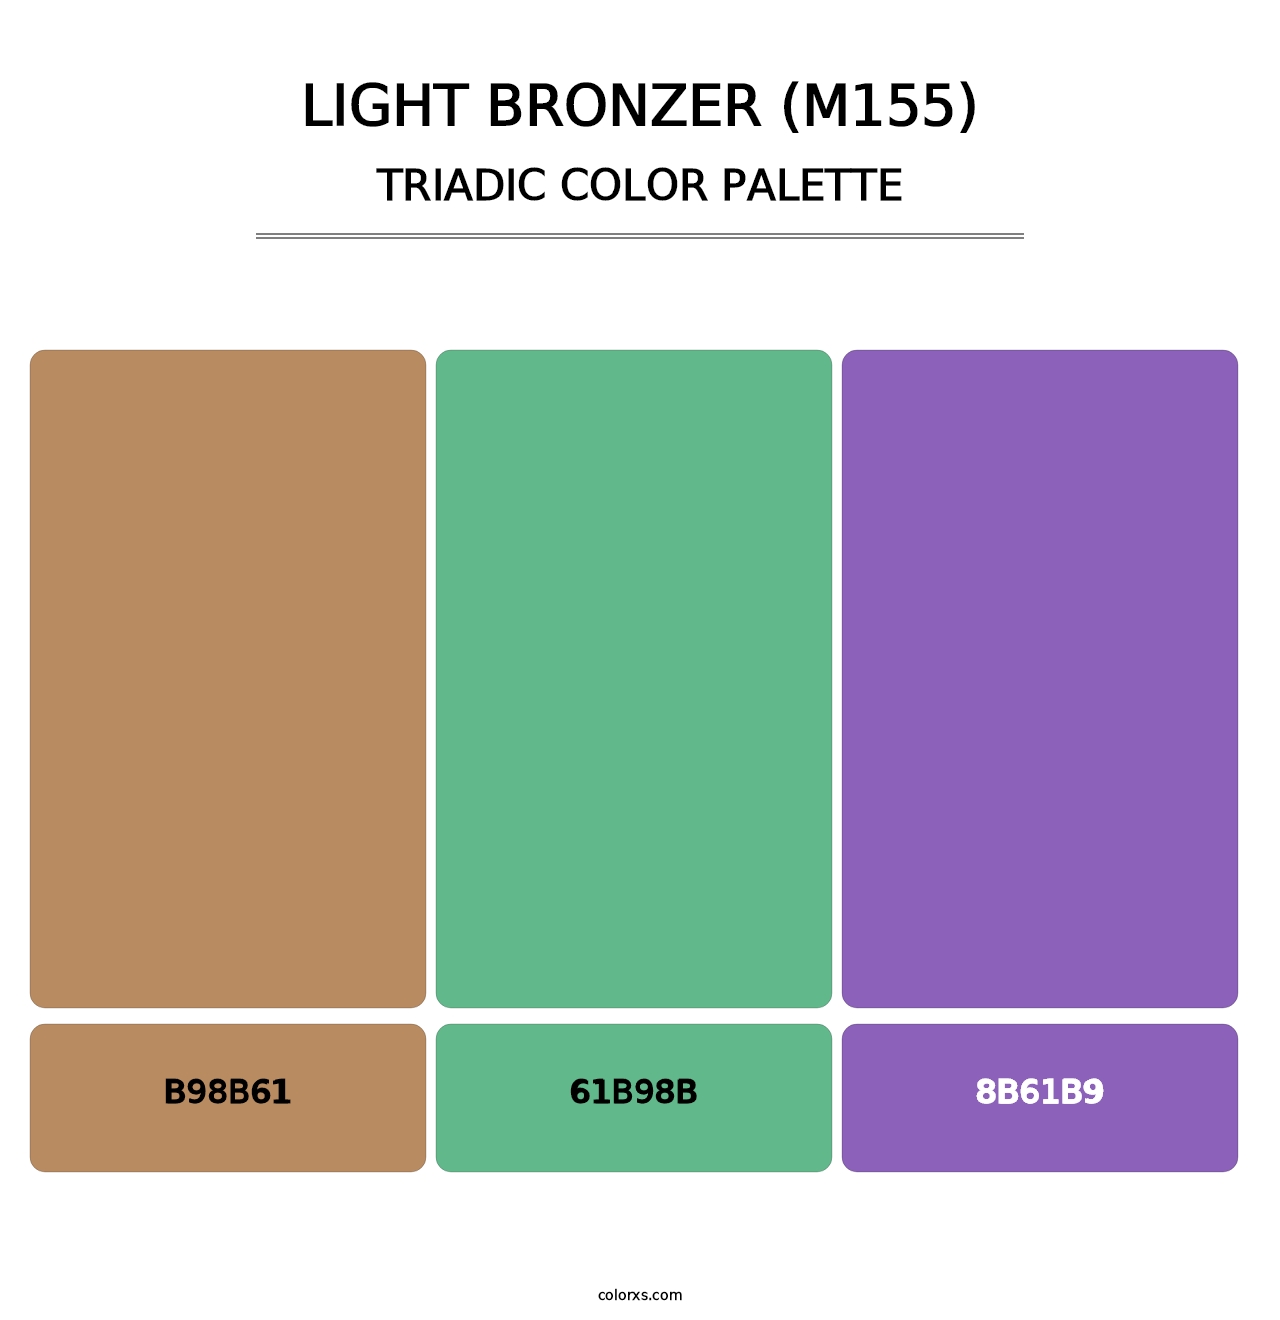 Light Bronzer (M155) - Triadic Color Palette